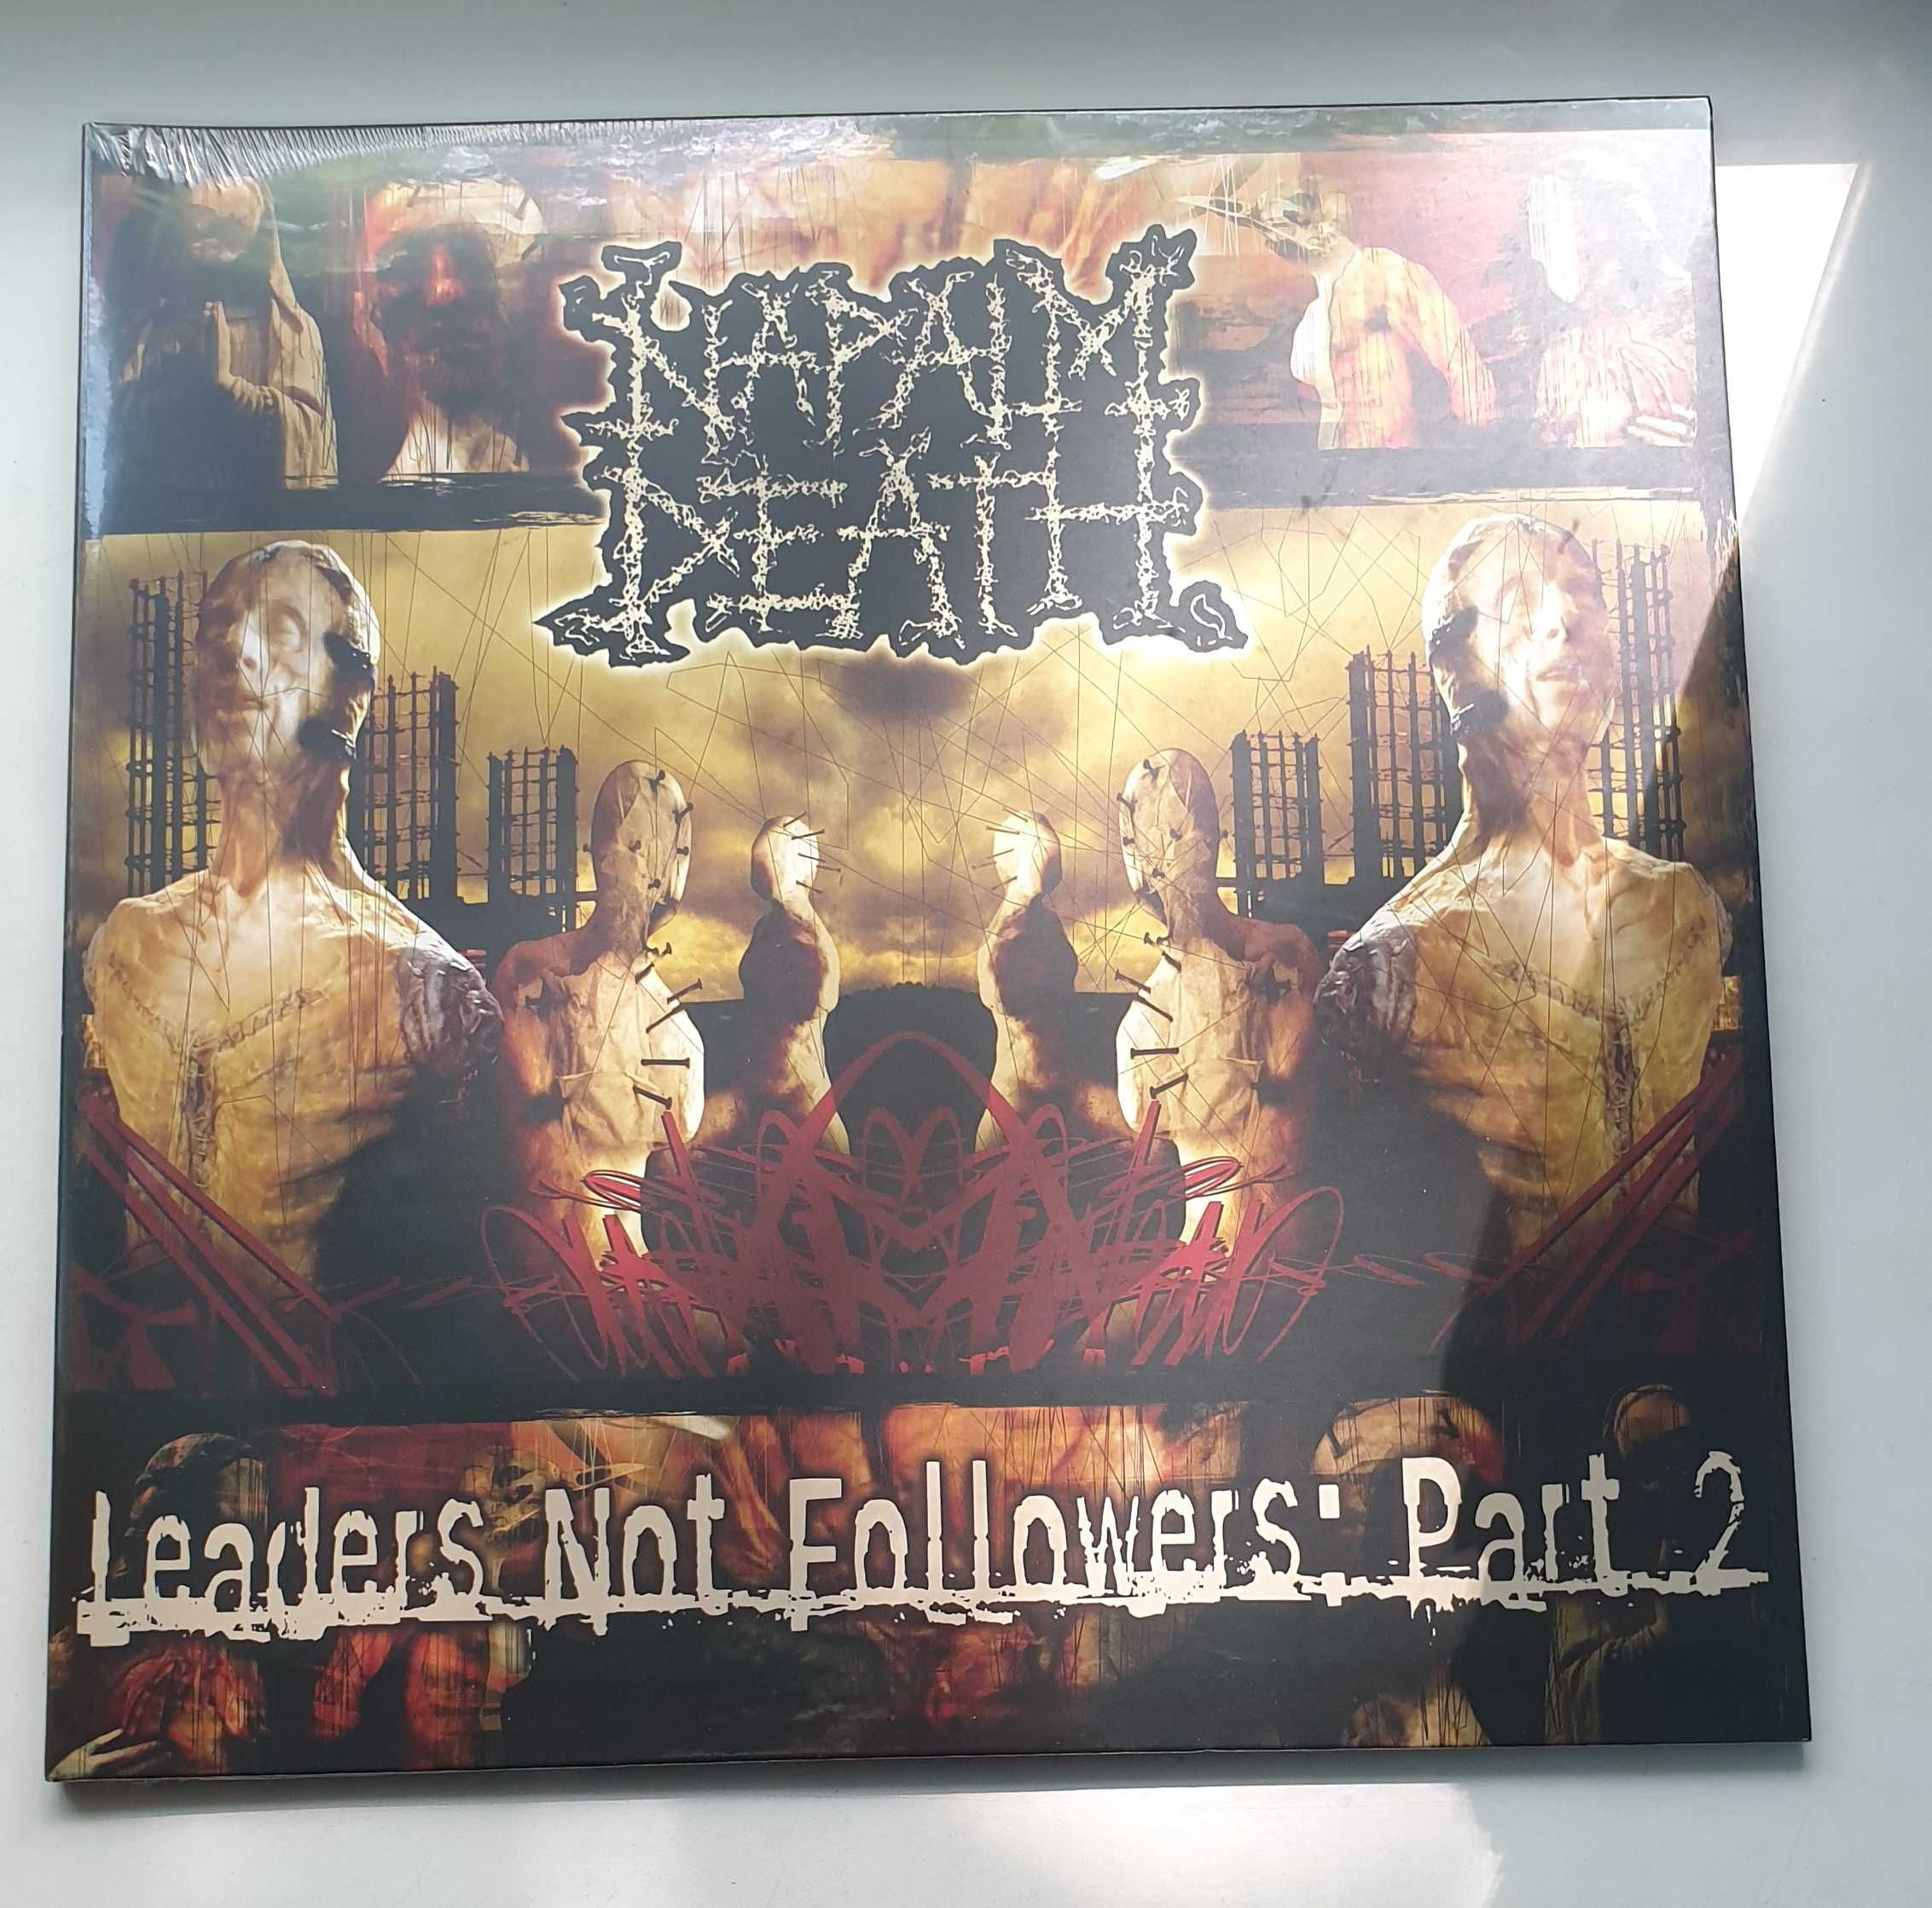 Винил NAPALM DEATH "Leaders Not Followers: Part 2" 12"LP grindcore